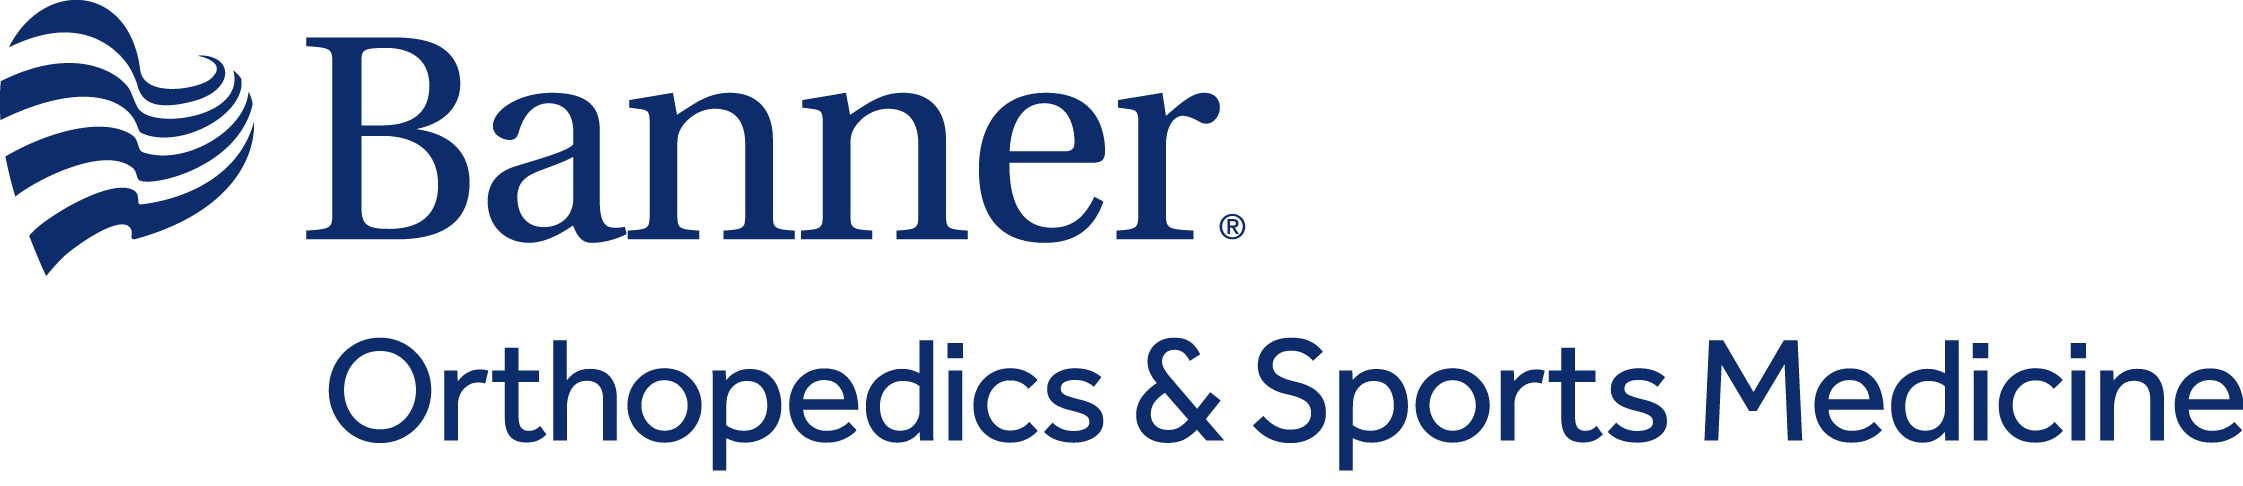 Banner Orthopedics and  Sports Medicine logo.png